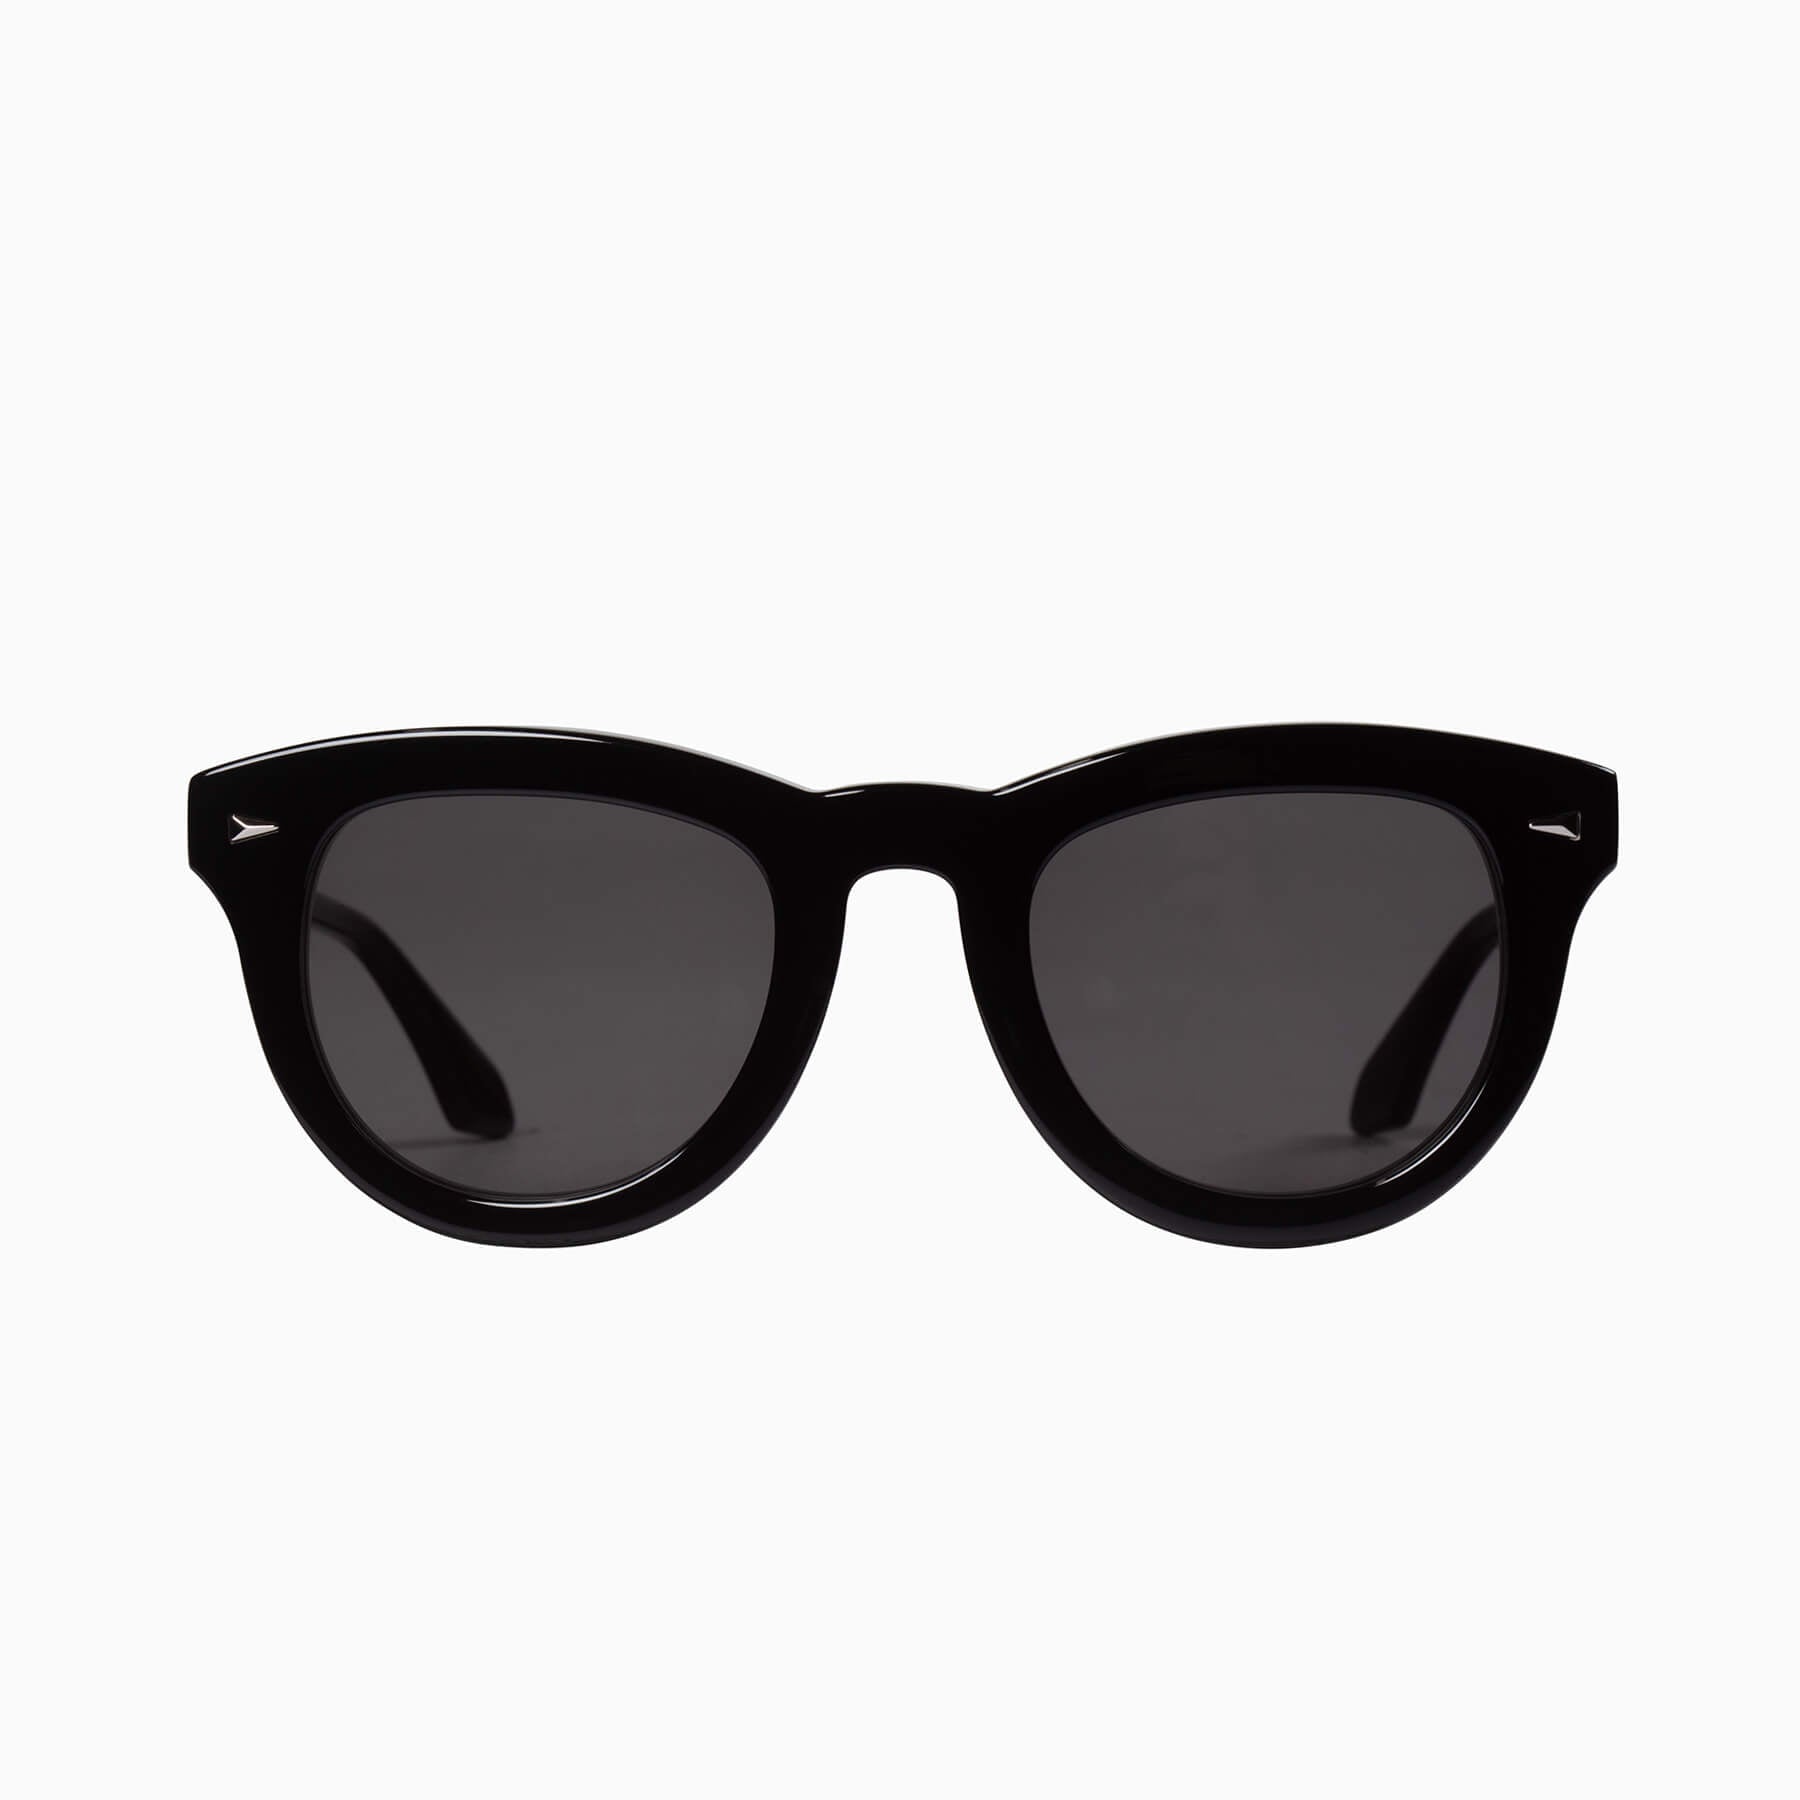 Women's Black Lens Gold-Toned Butterfly Sunglasses